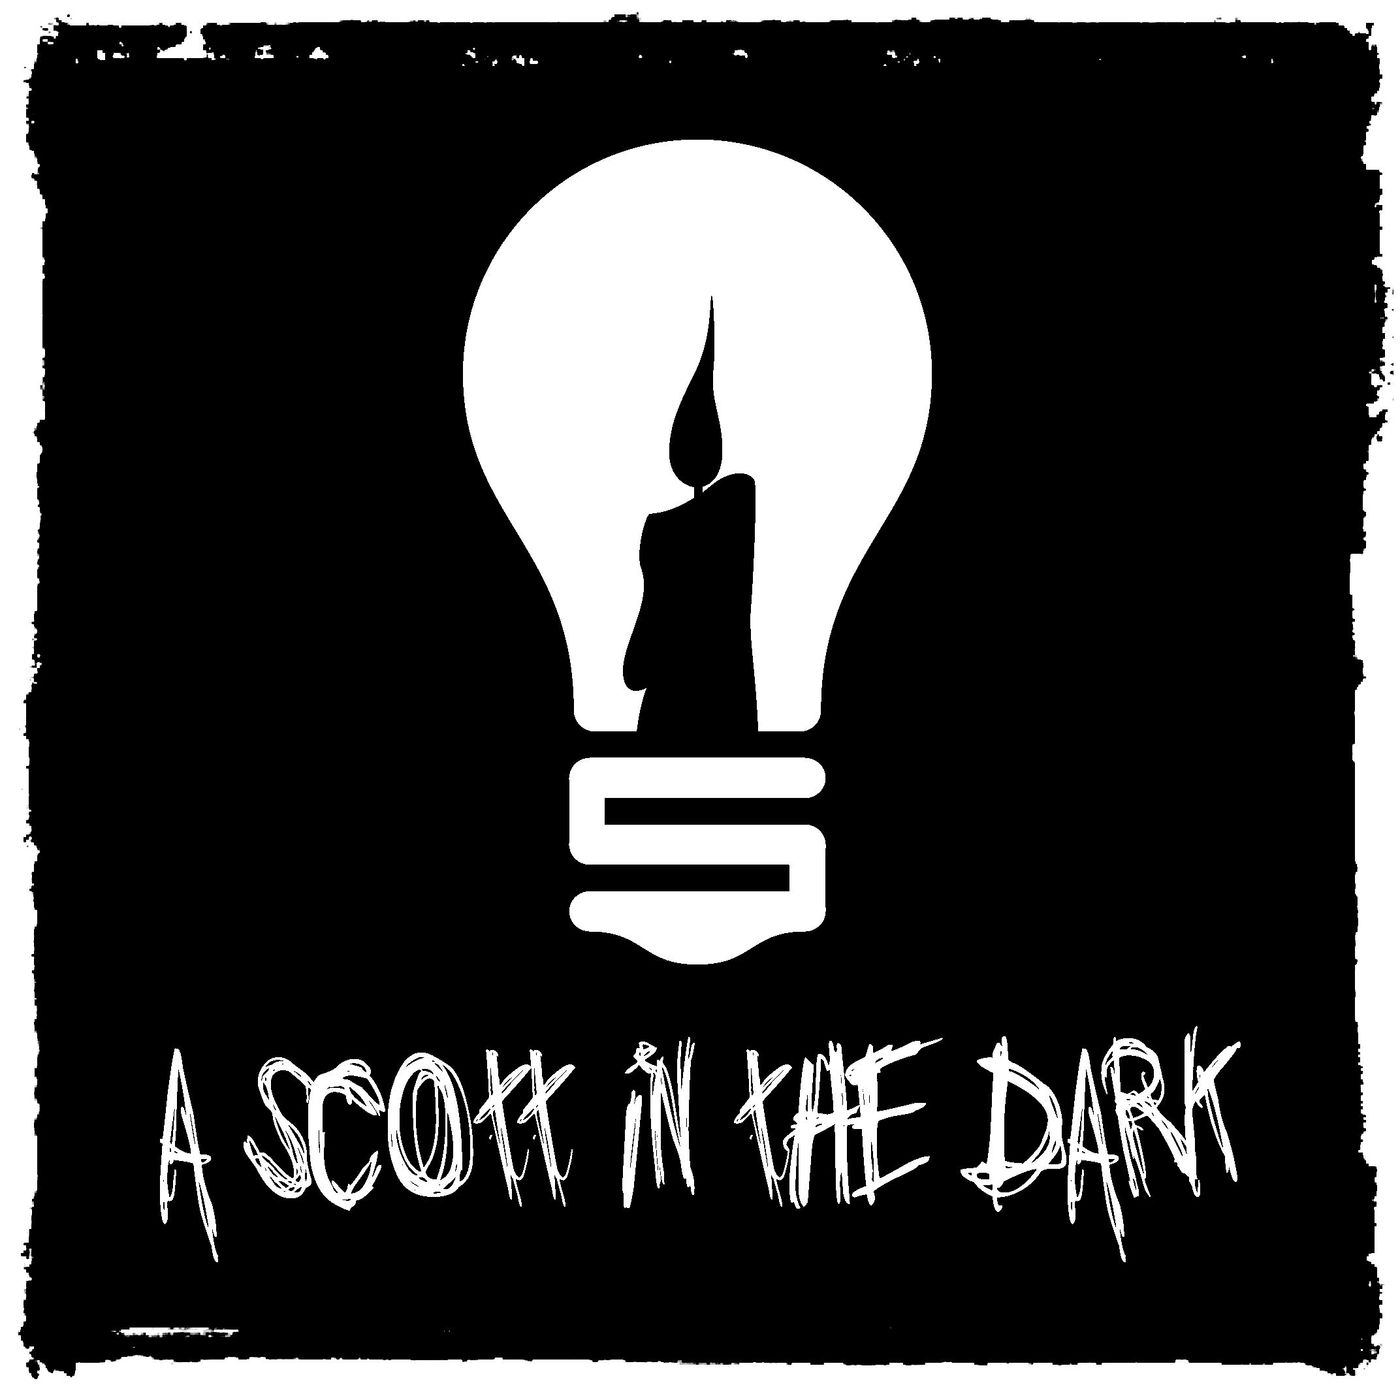 [A Scott in the Dark] Episode 22 The 4 Levels of Haunt